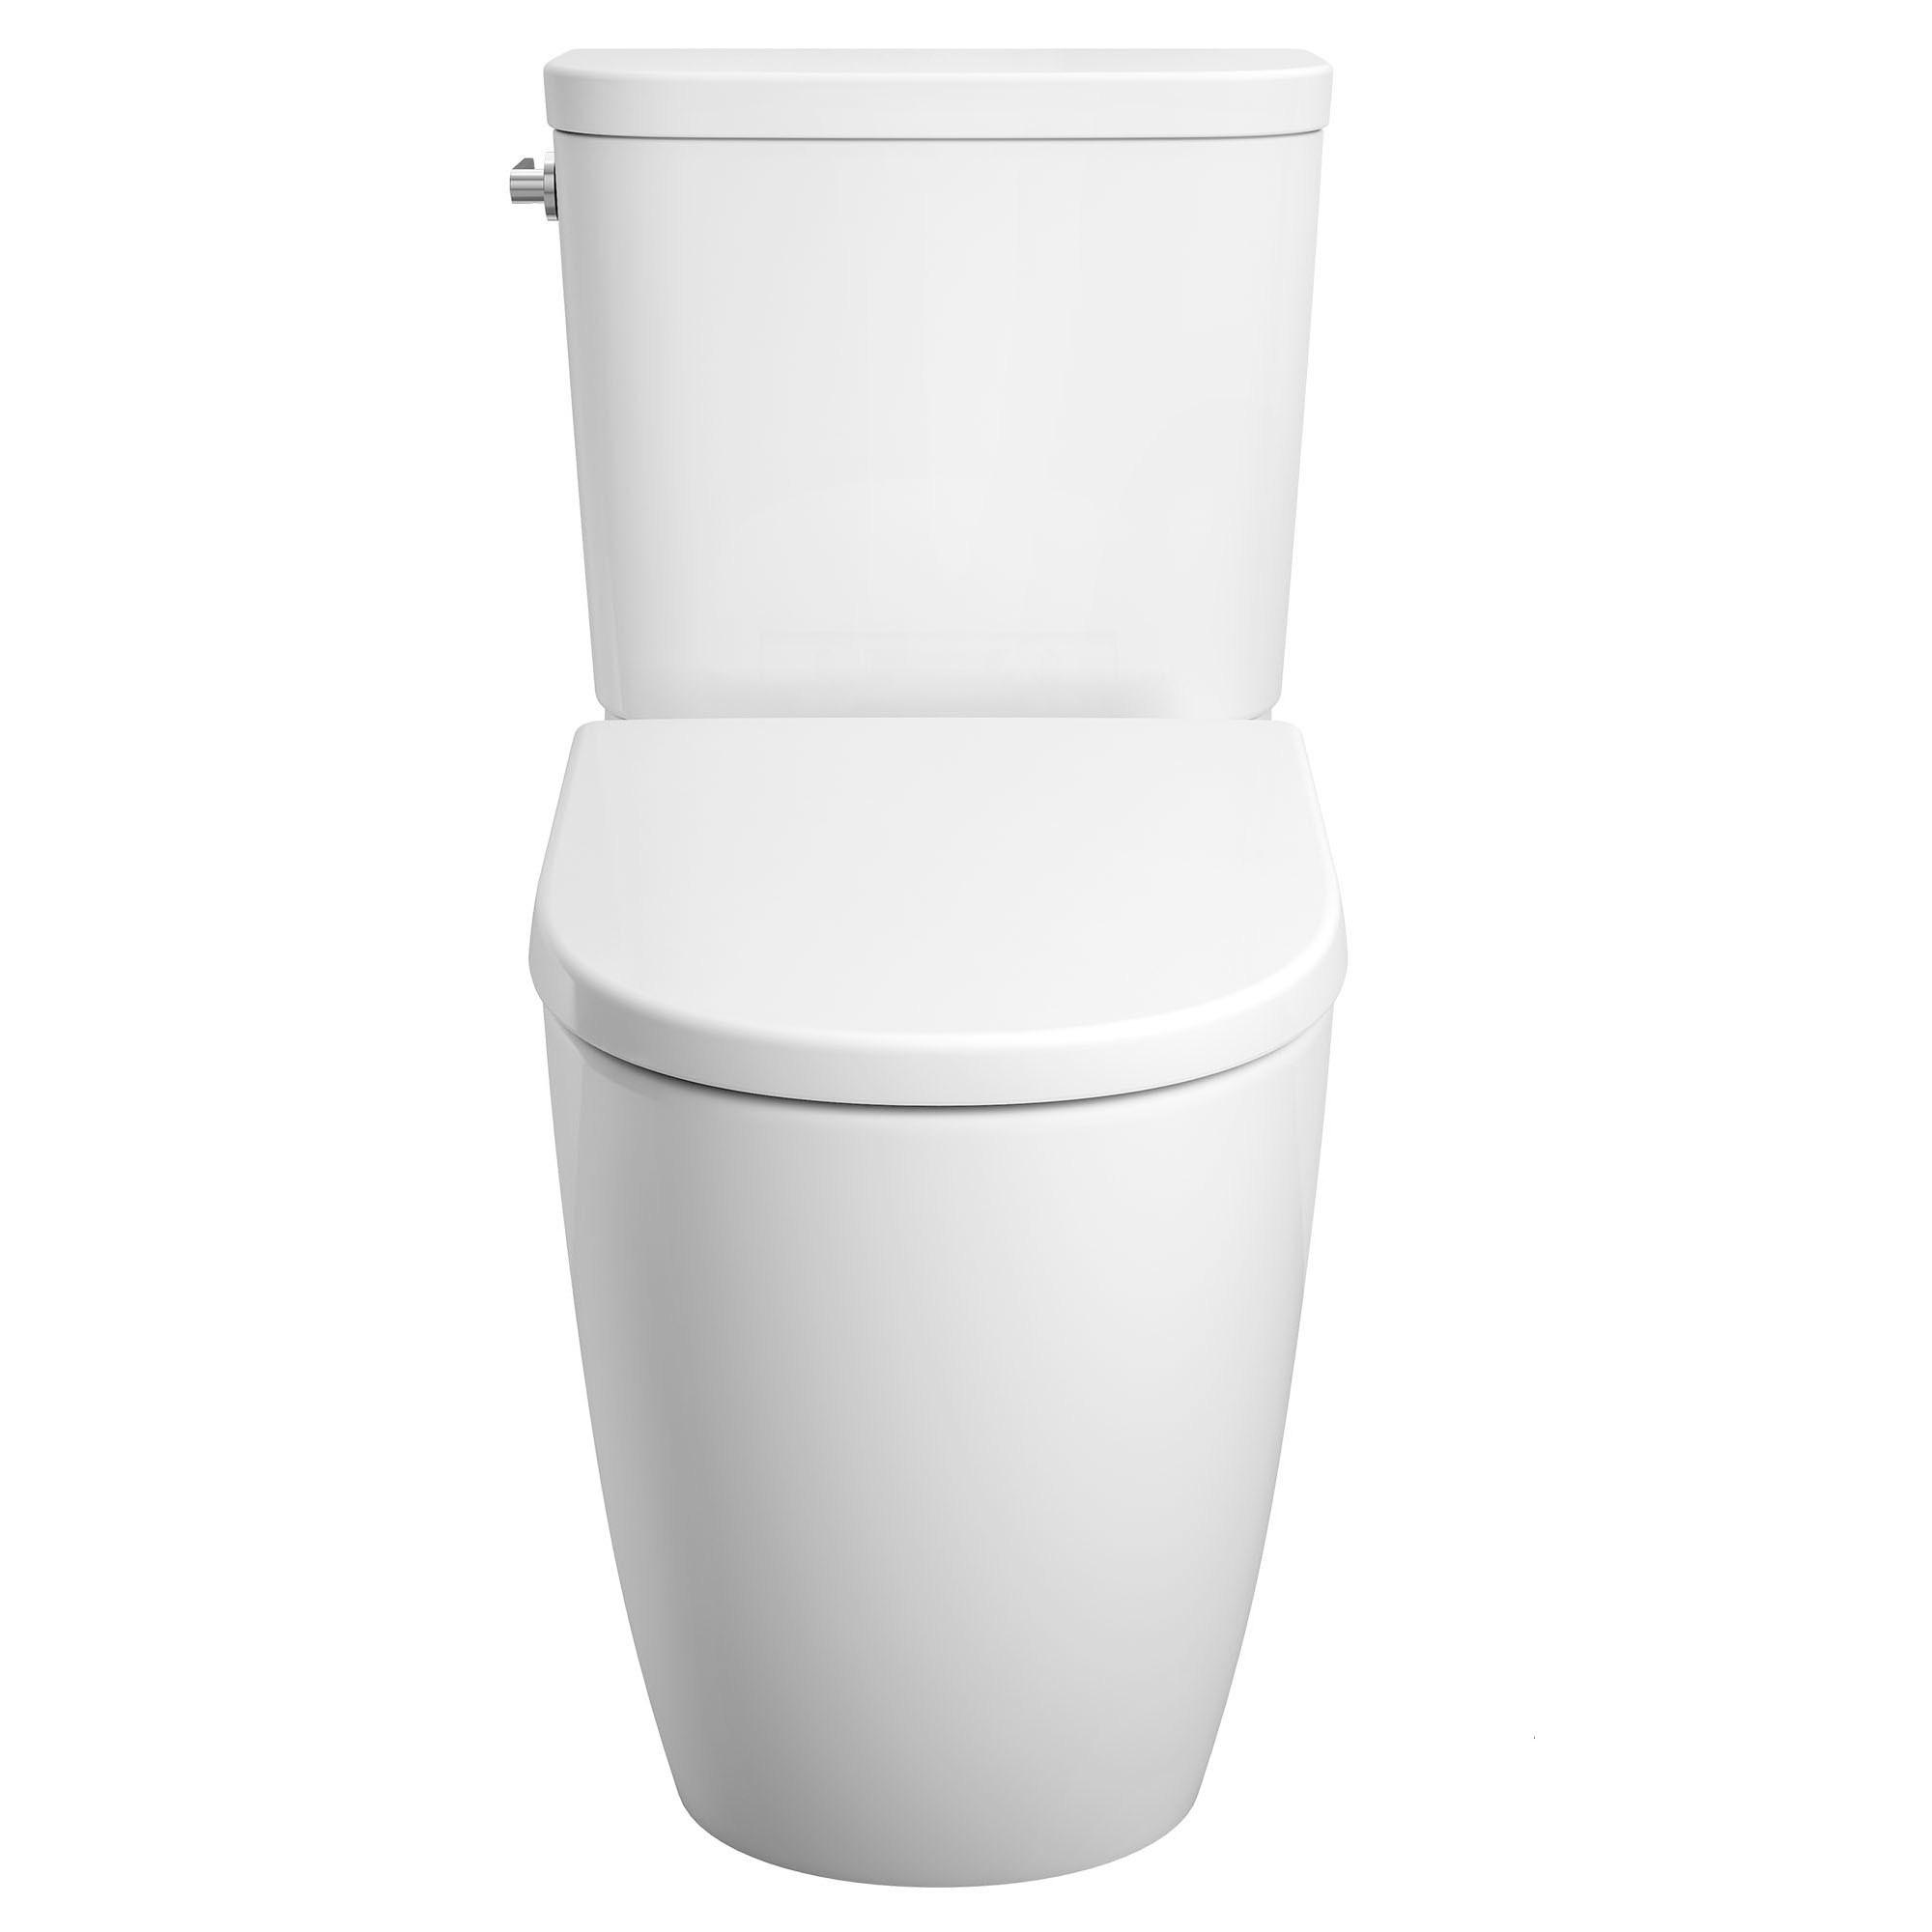 Essence 2-pc Alpine White Elongated Toilet w/Left Hand Lever